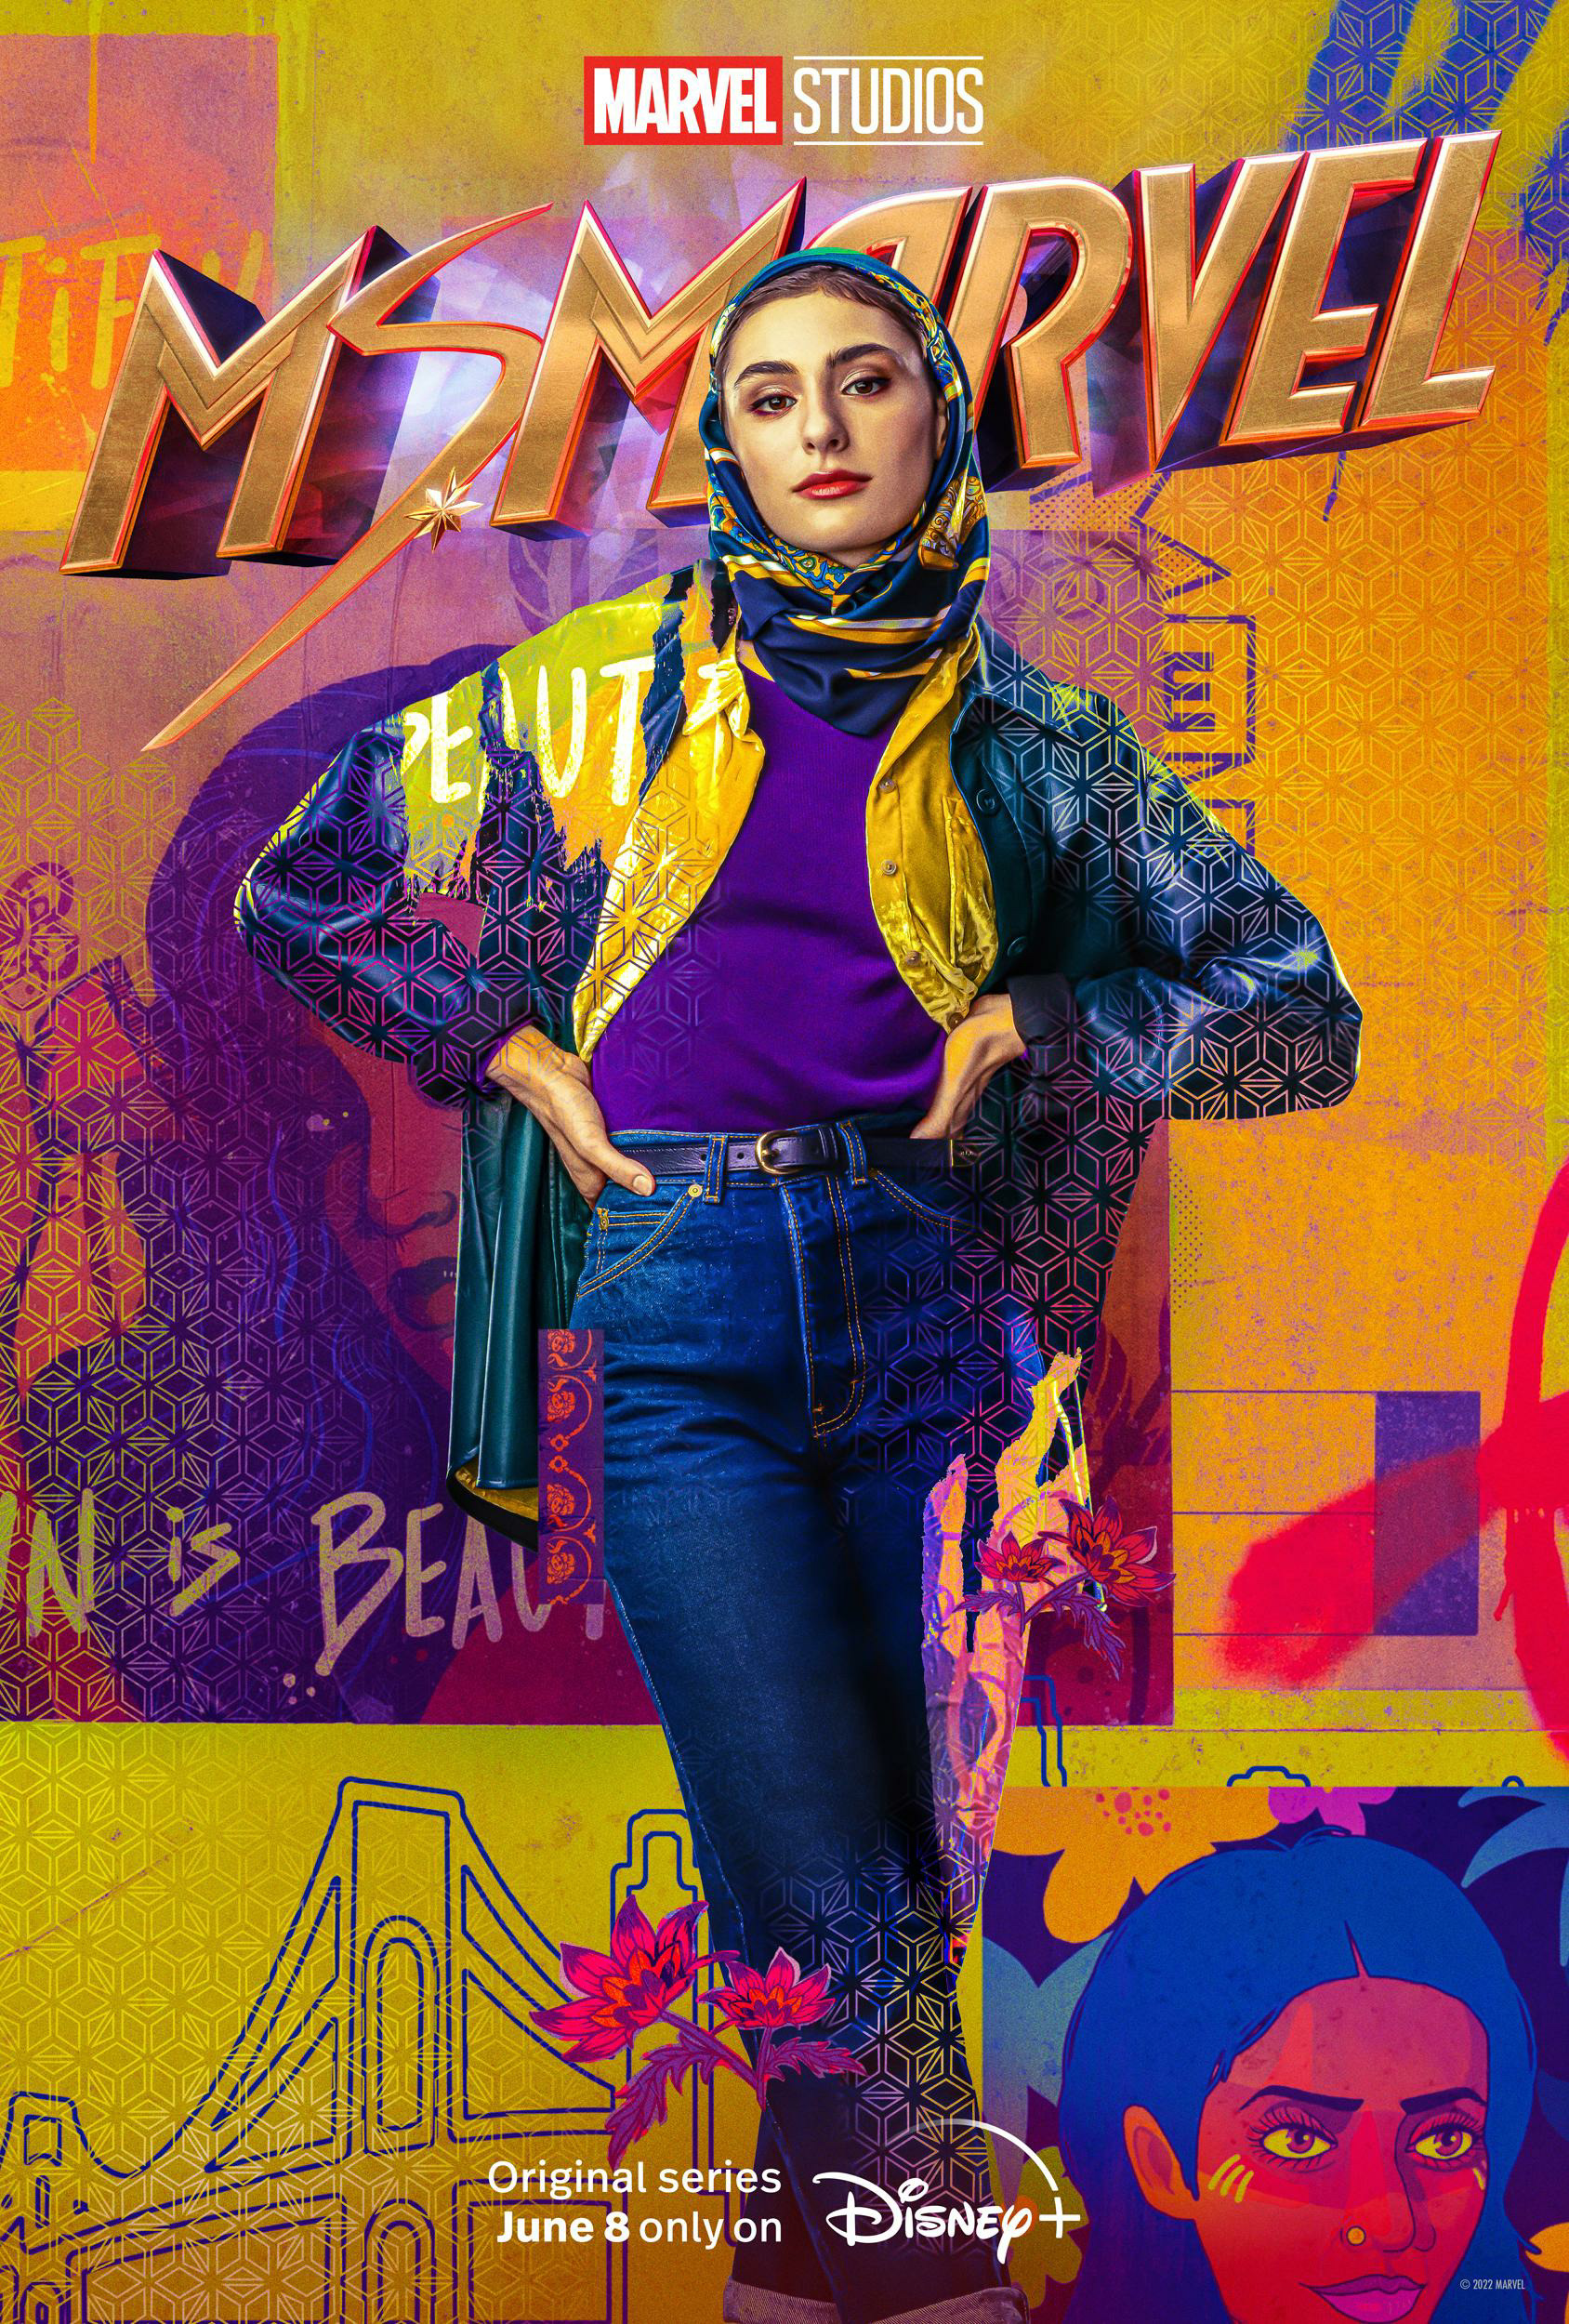 Mega Sized TV Poster Image for Ms. Marvel (#5 of 12)